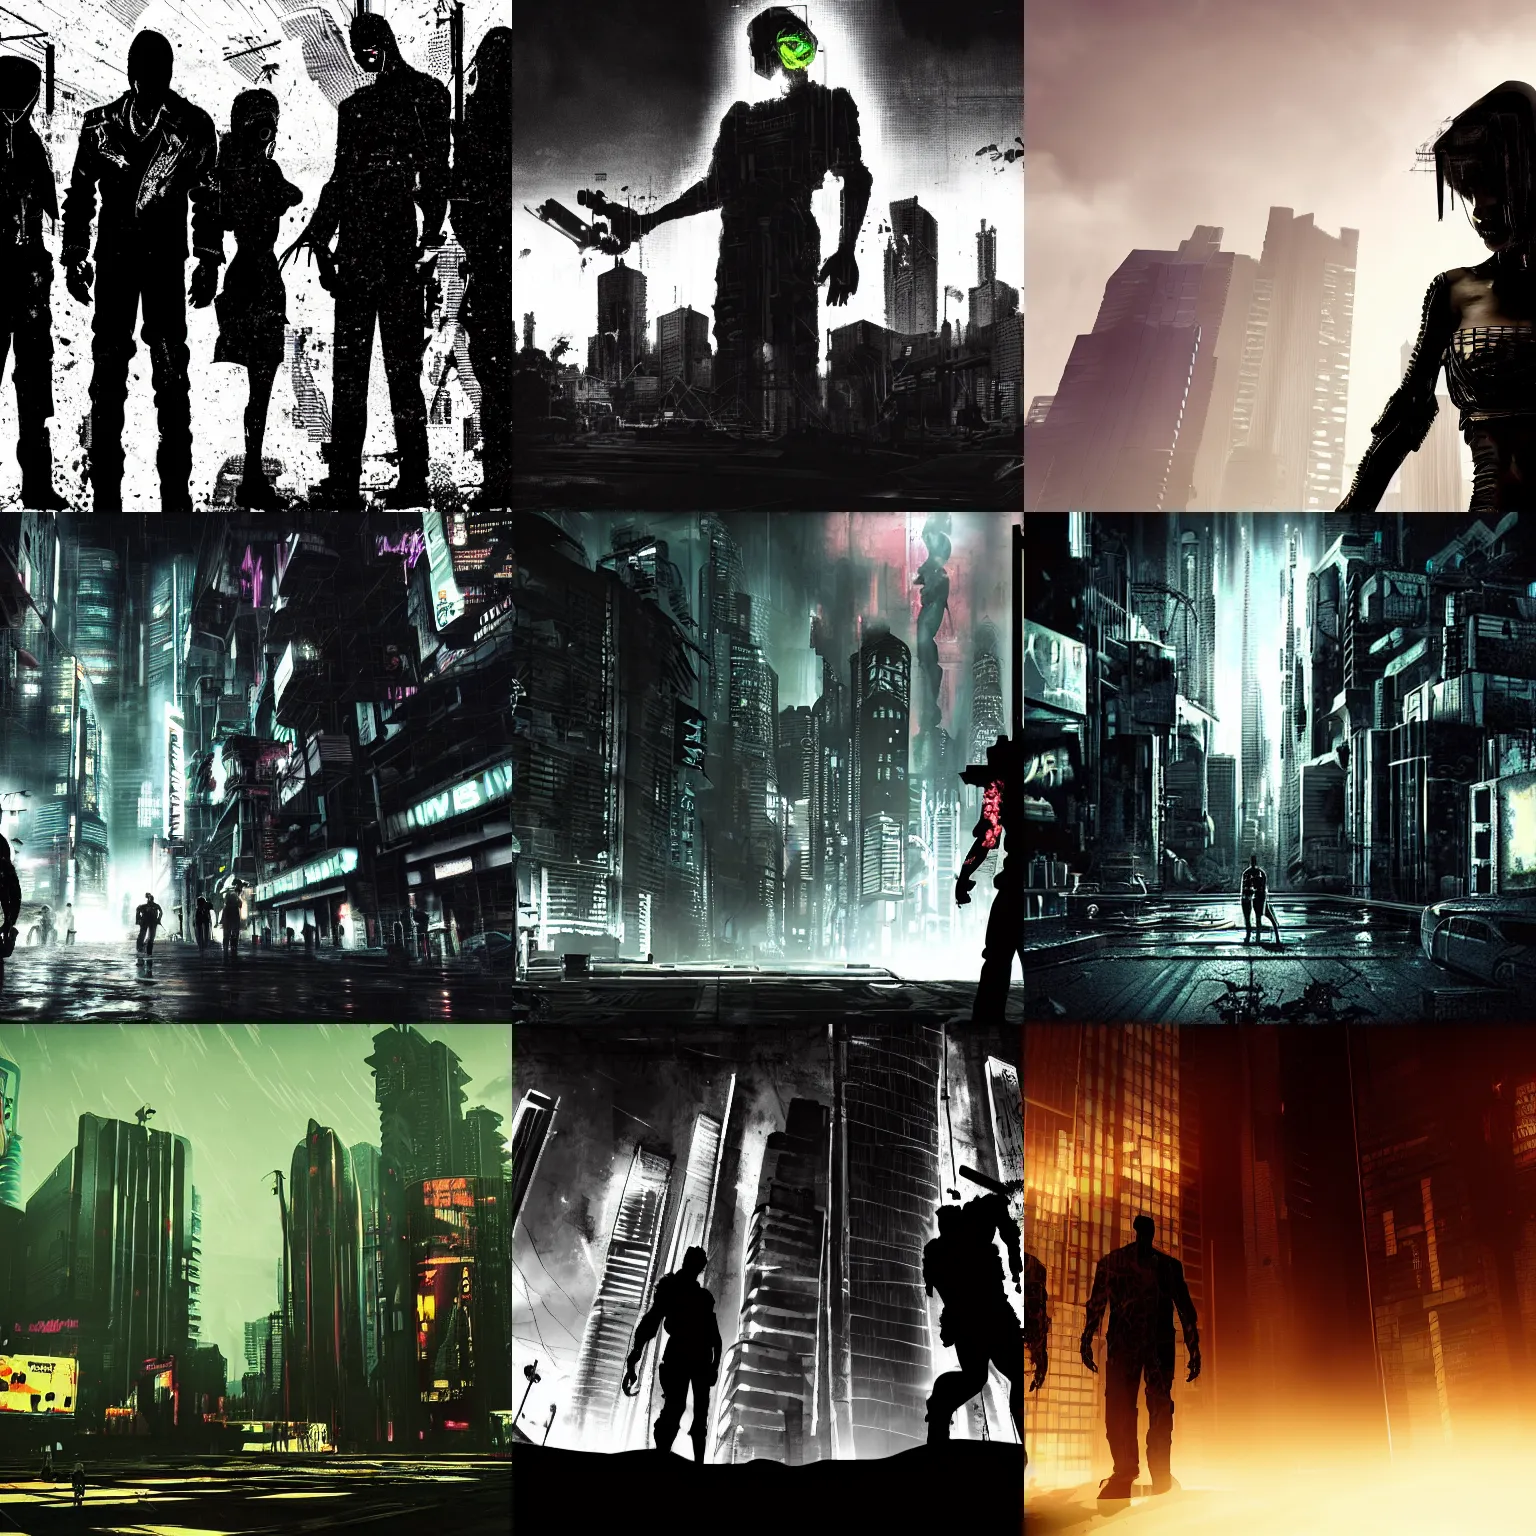 Prompt: cyberpunk dead city silhouettes dark dying dramatic shadows